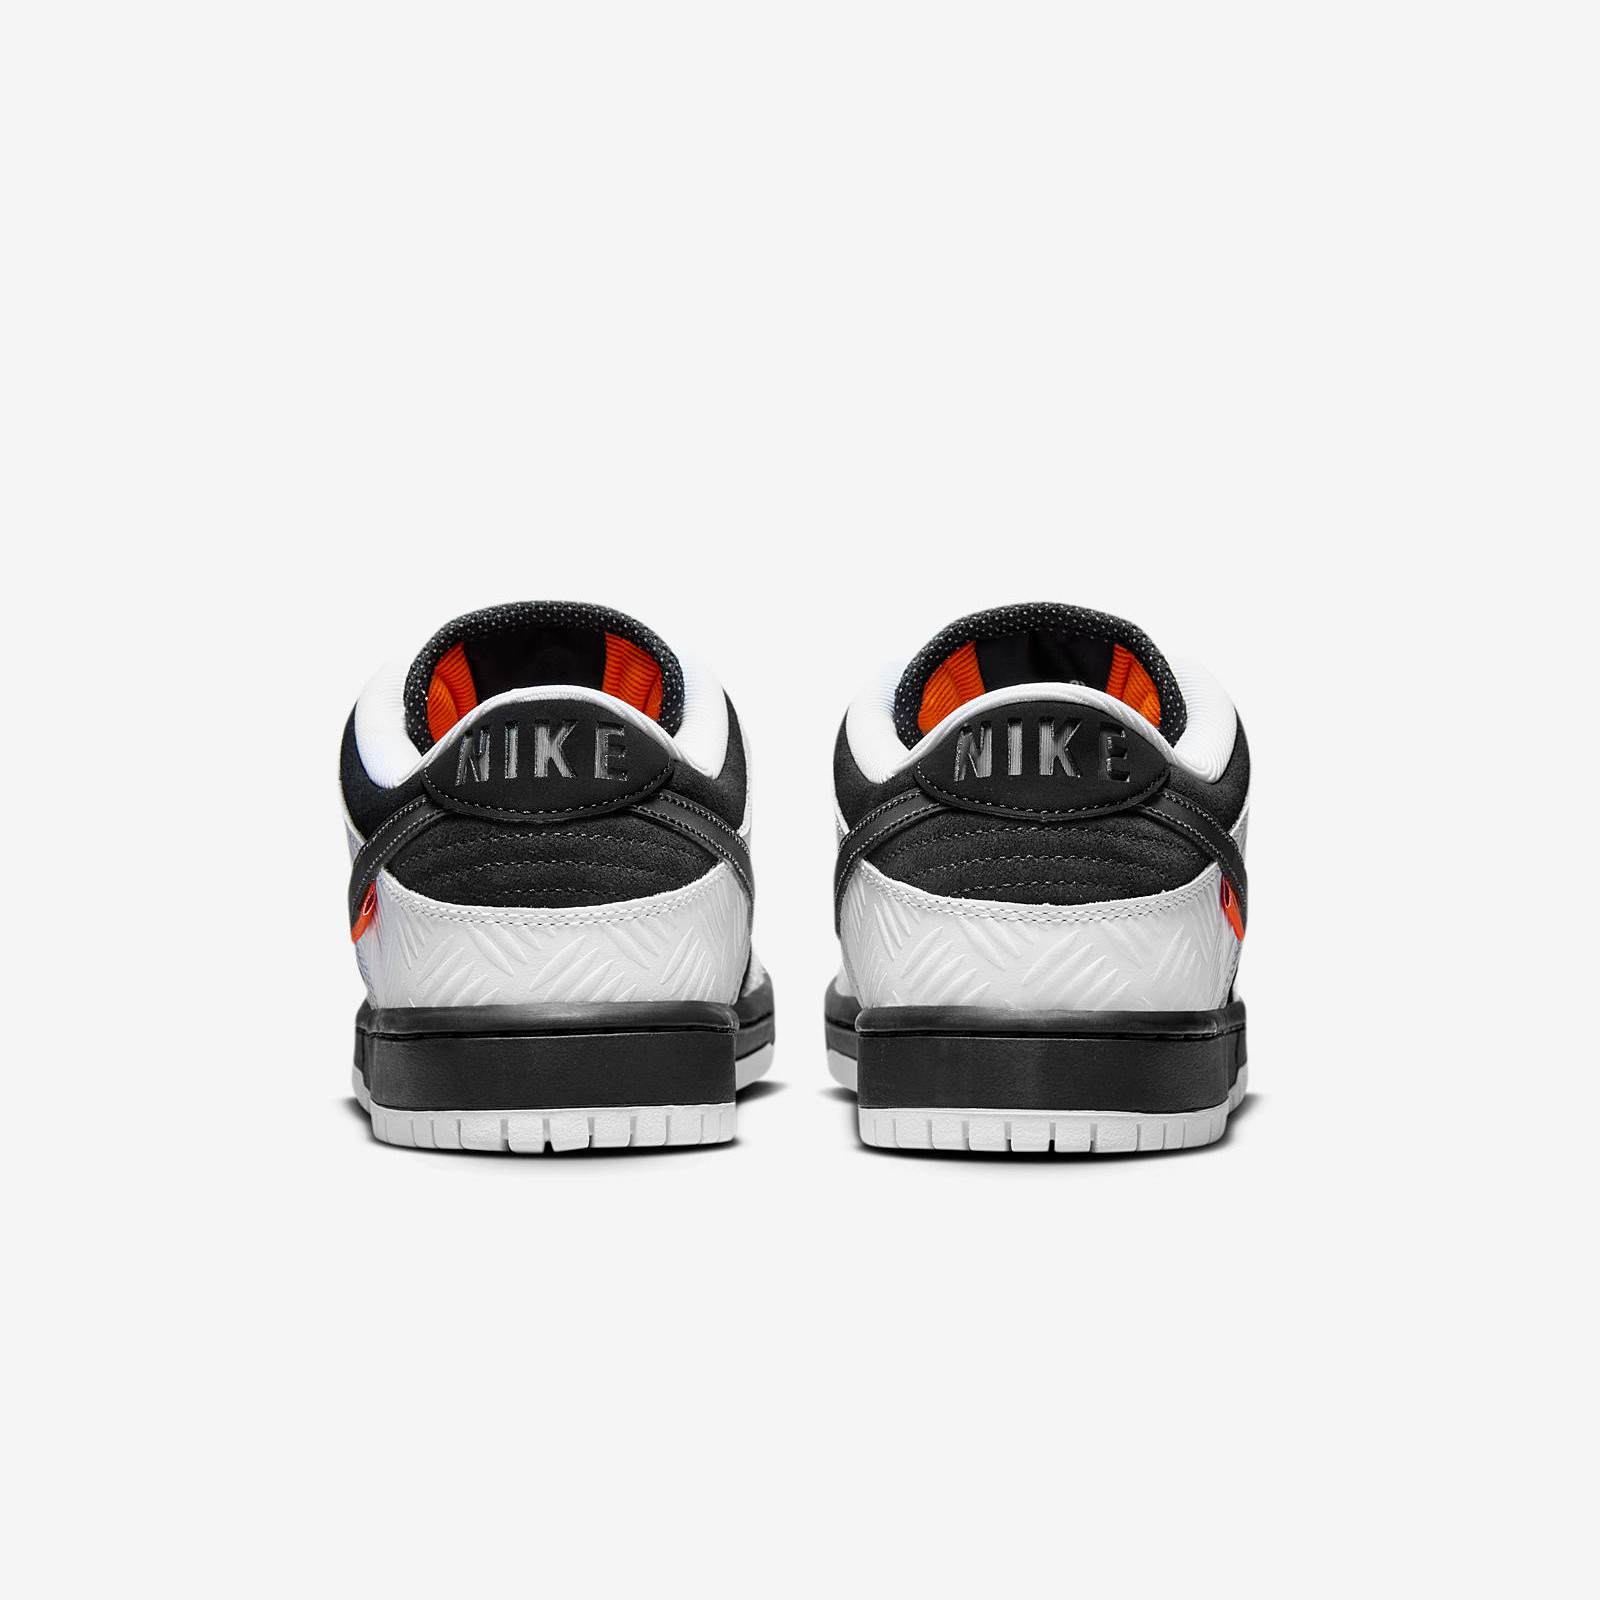 TIGHTBOOTH x Nike
SB Dunk Low
Black / White